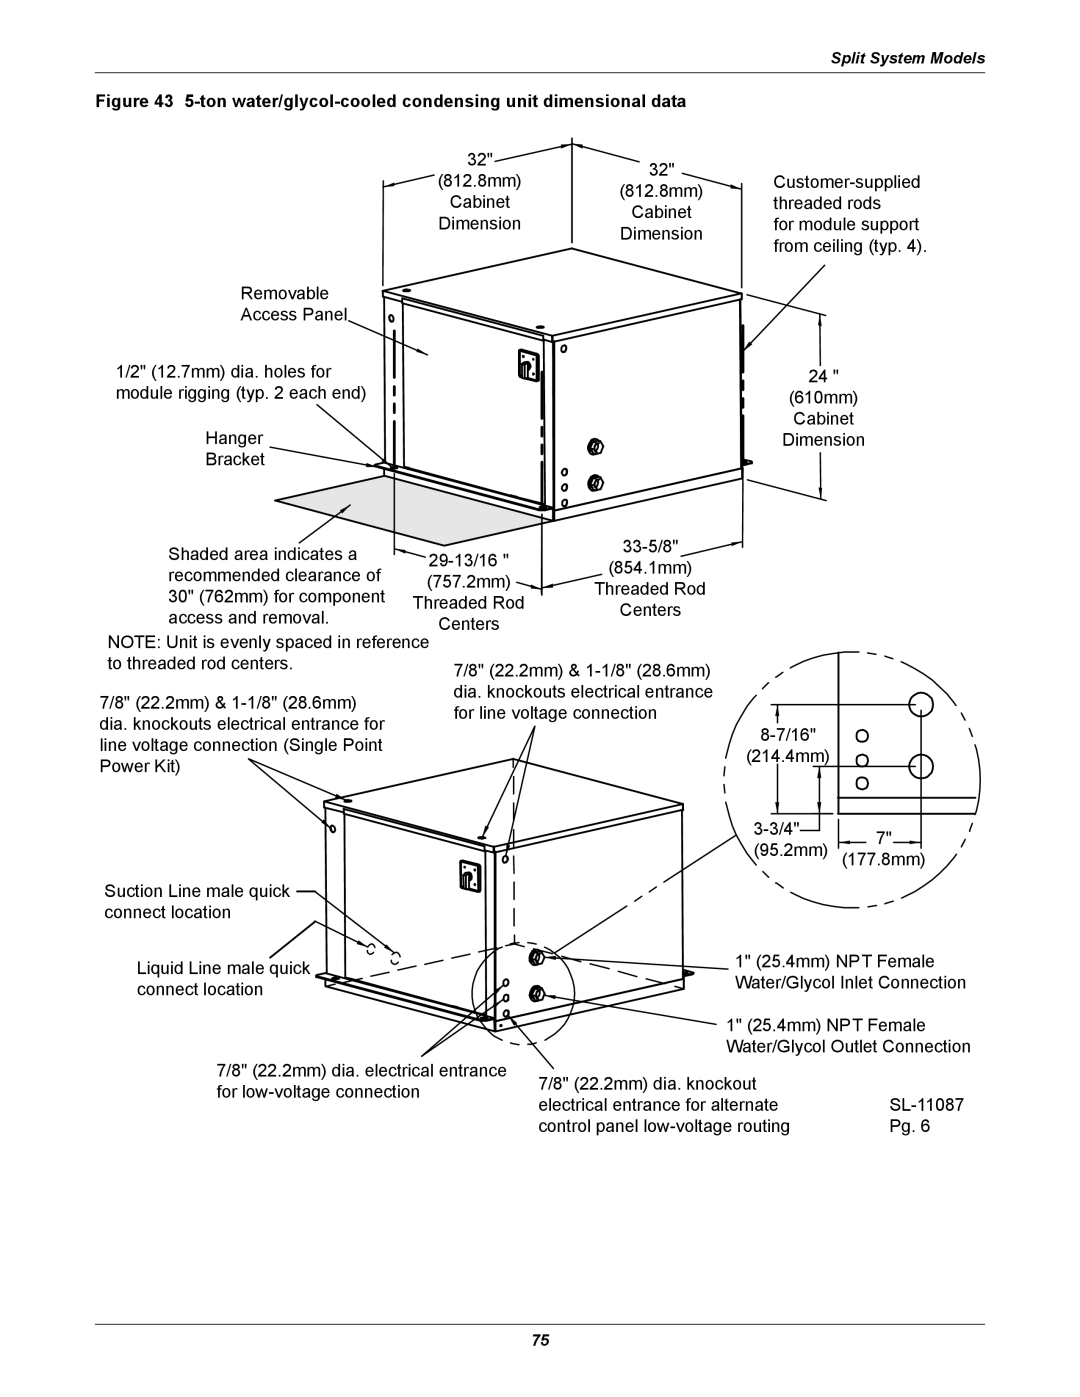 Emerson 3000 installation manual 32 812.8mm Cabinet Dimension Removable 